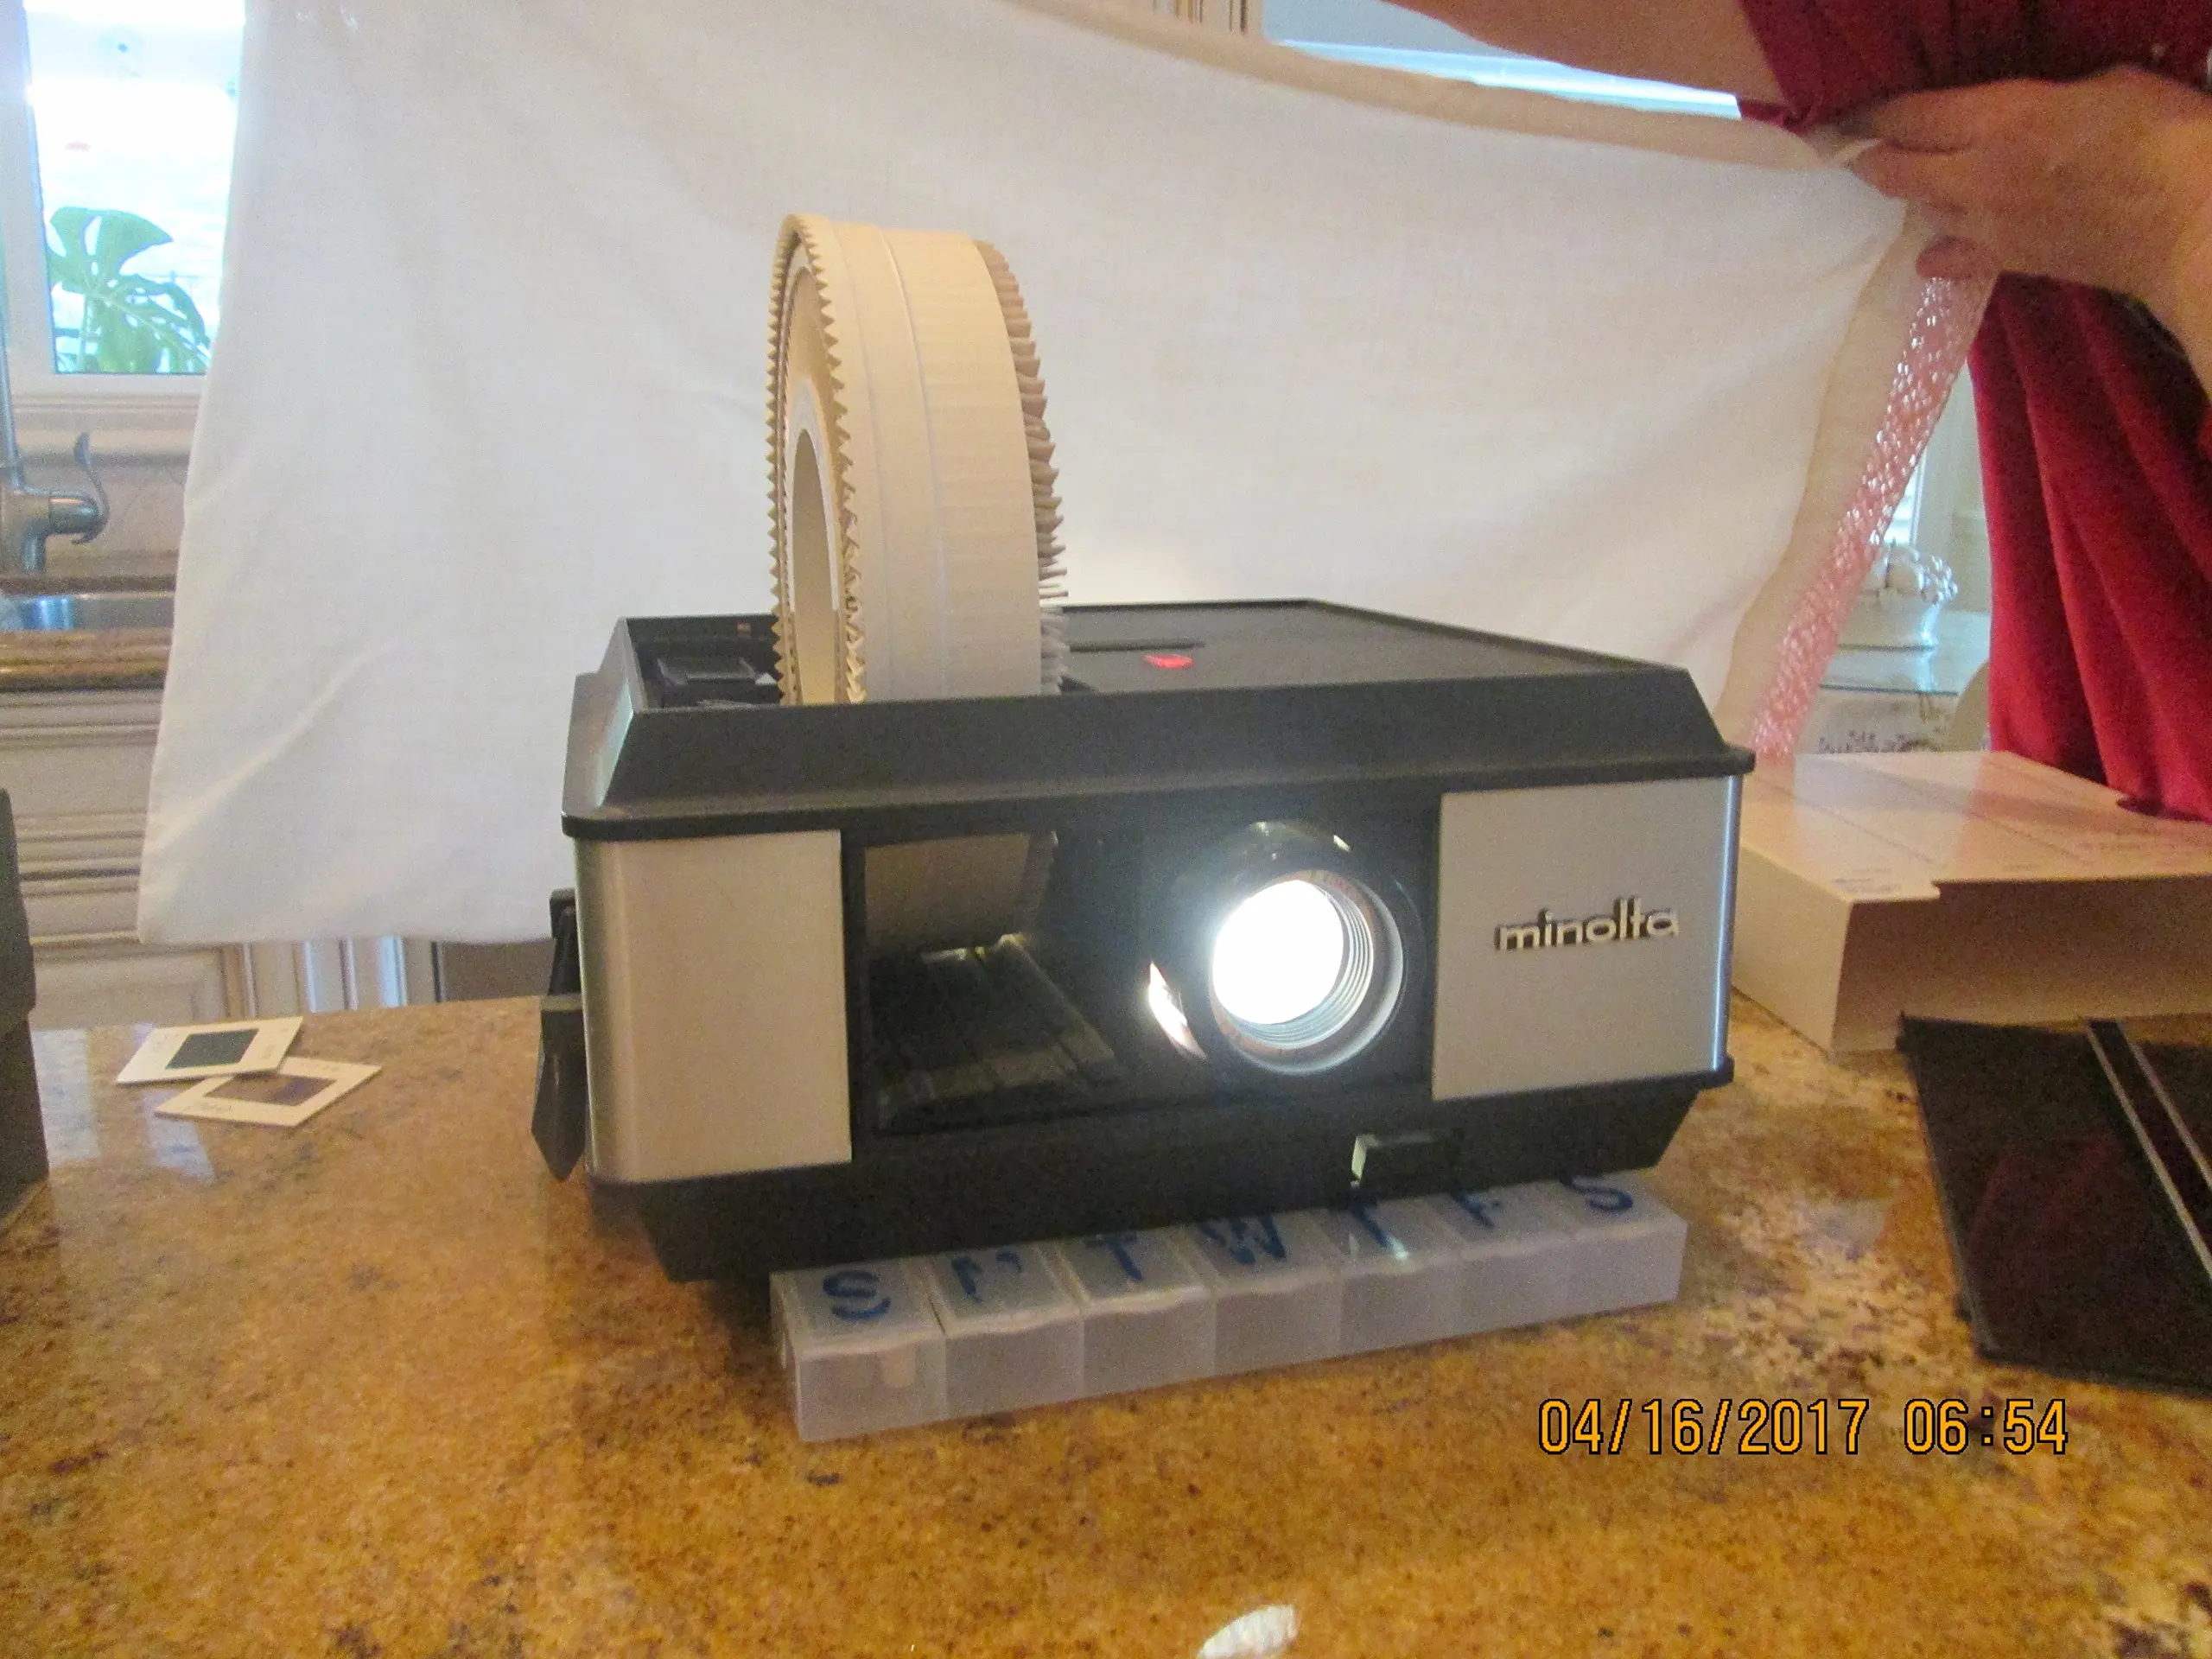 35mm slide projector